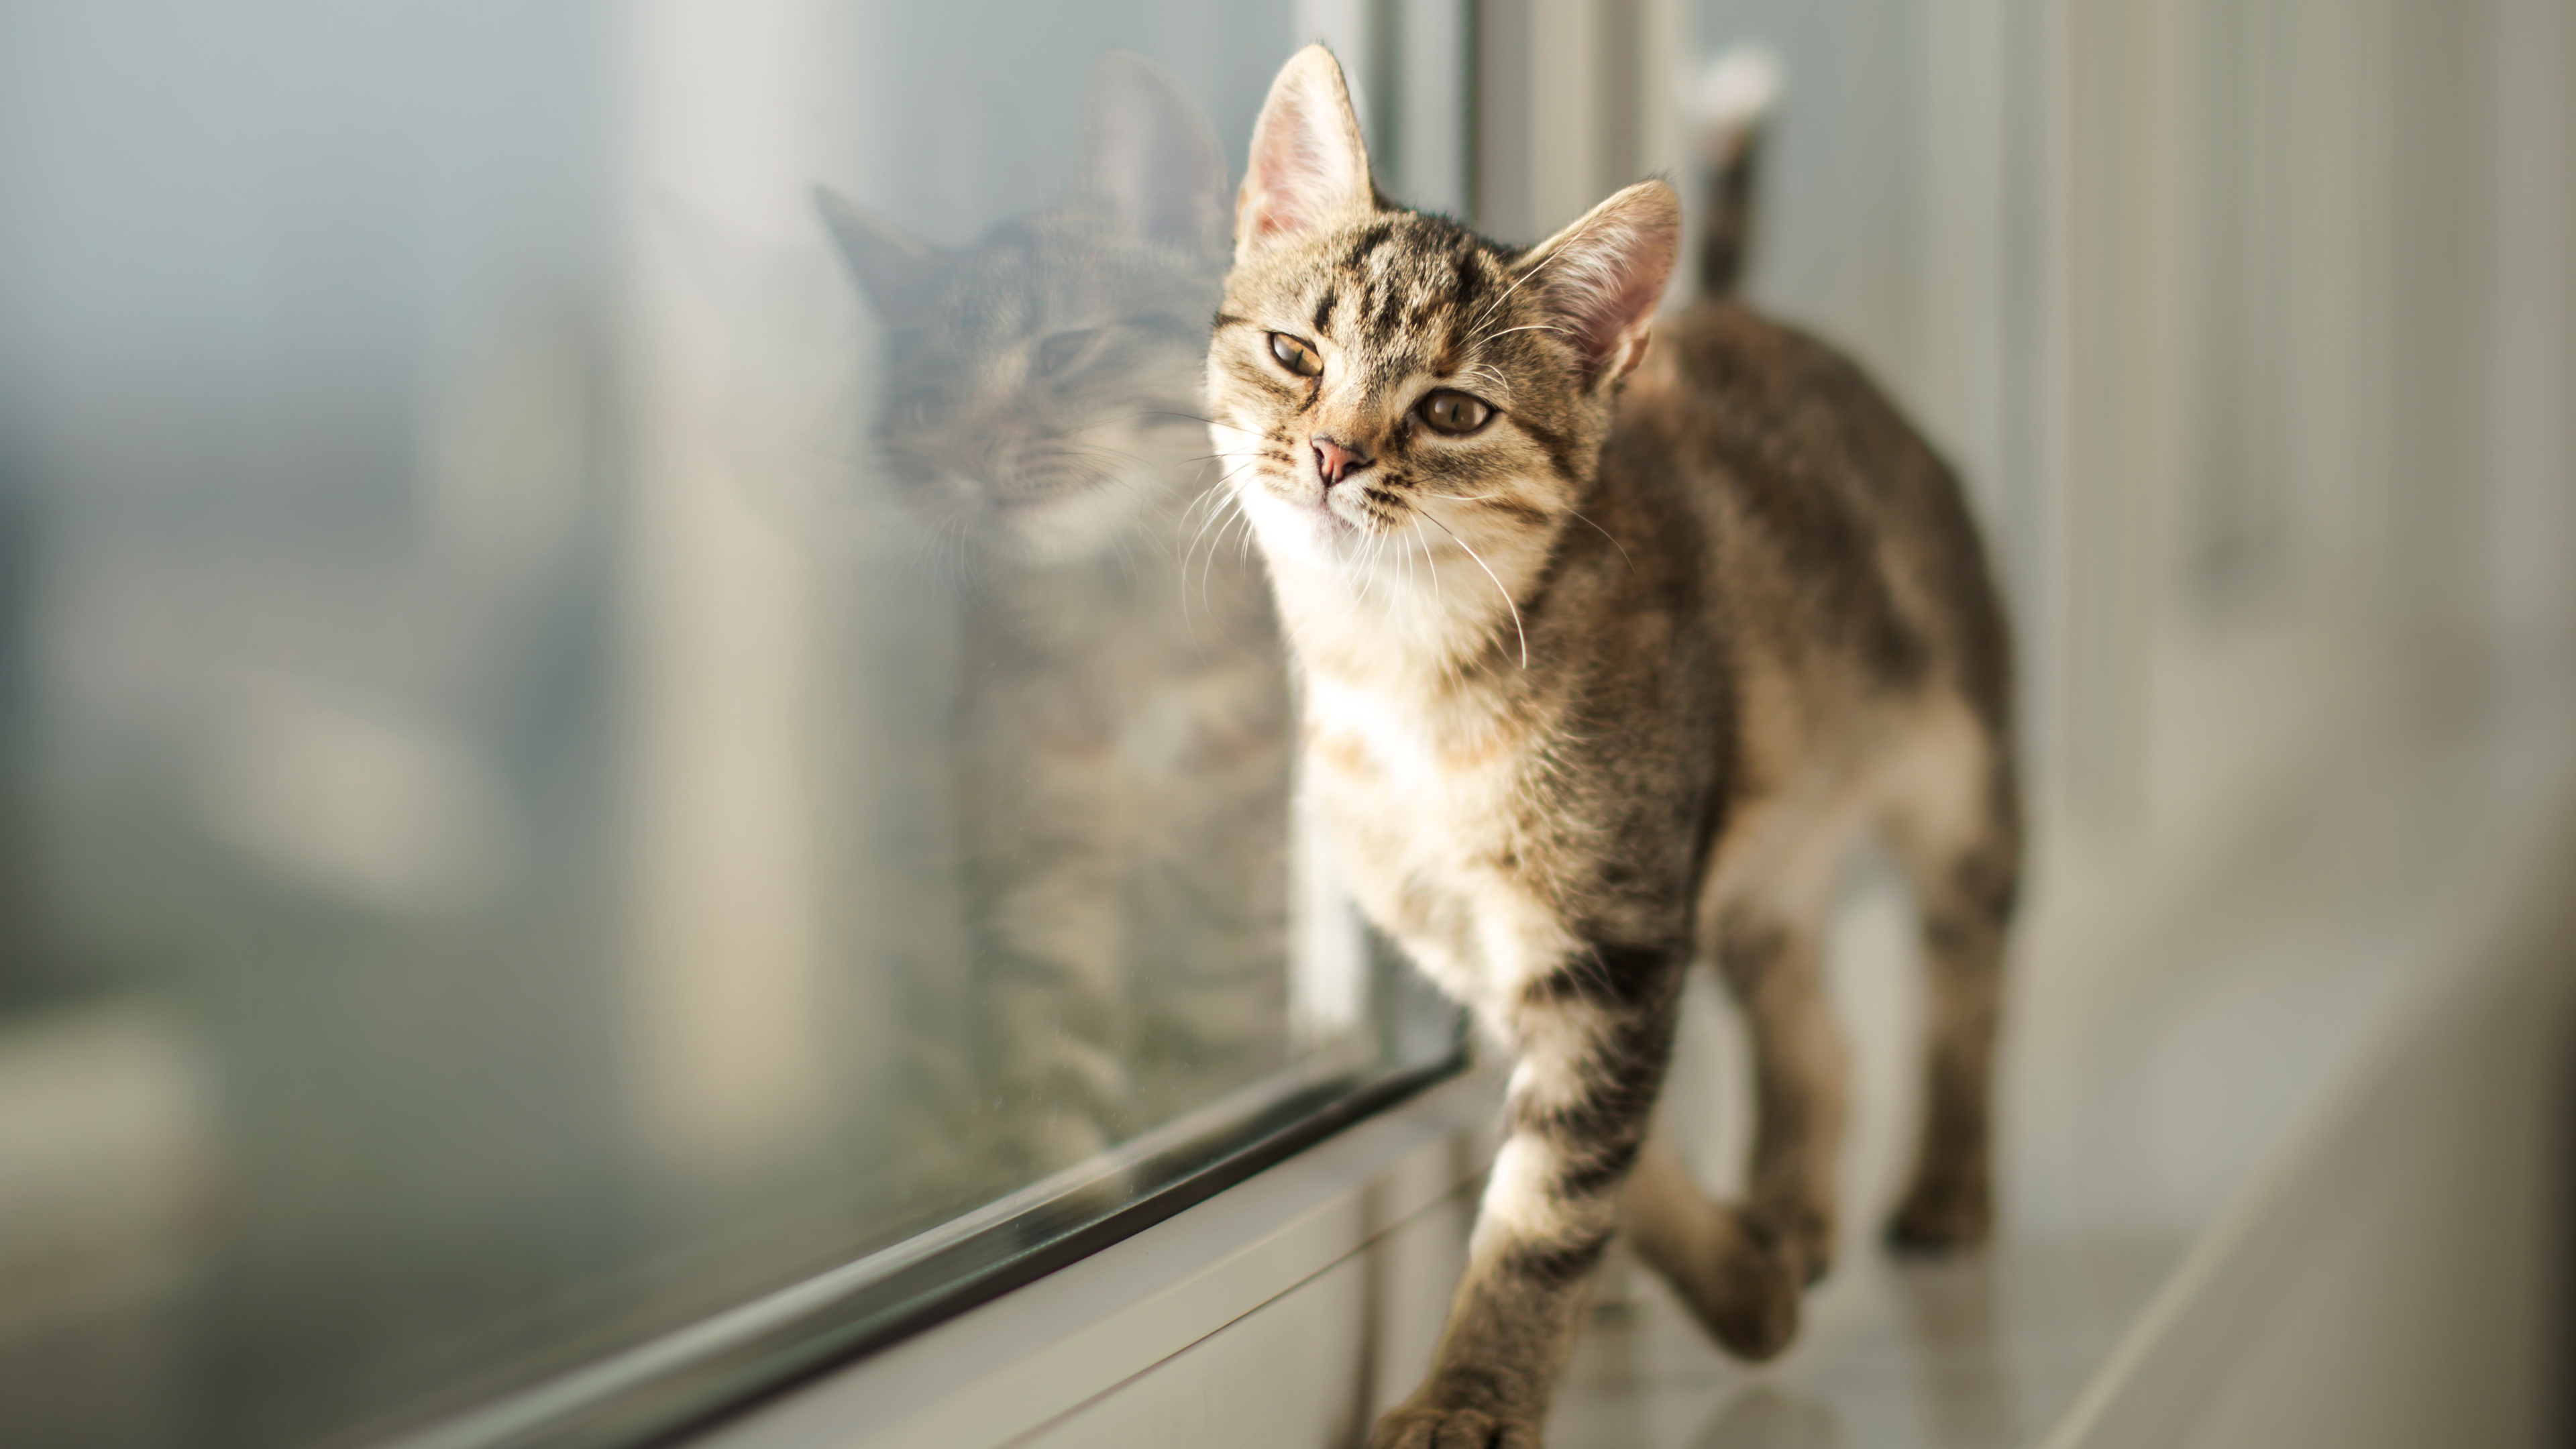 Kitten walking along a windowsill indoors